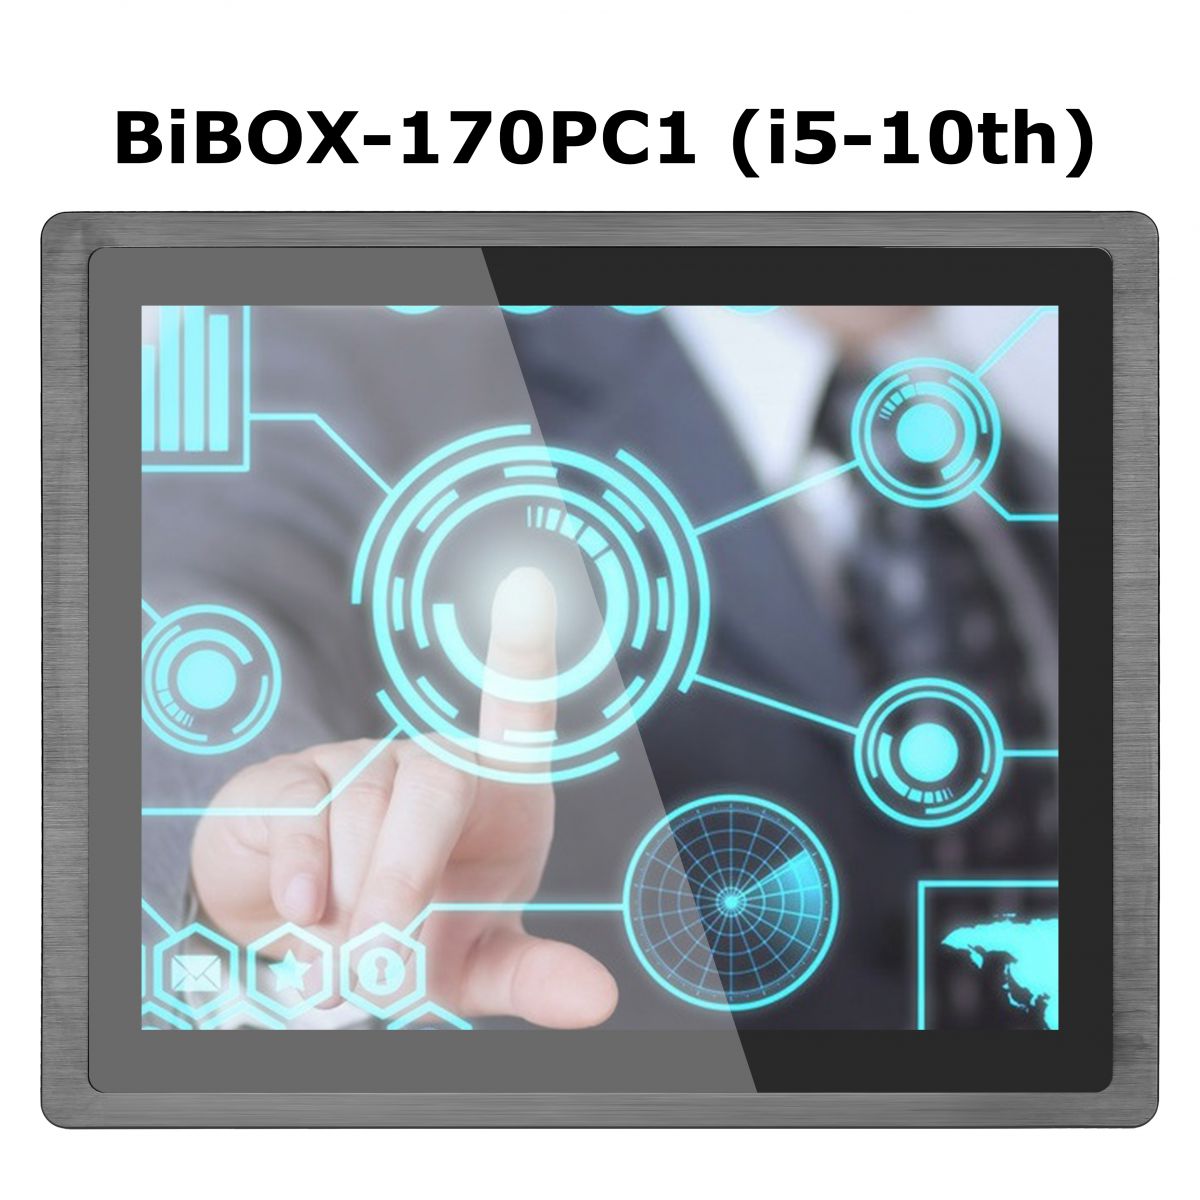 BiBOX-170PC1 -  Industrial panel PC with efficient Intel Core i5 processor